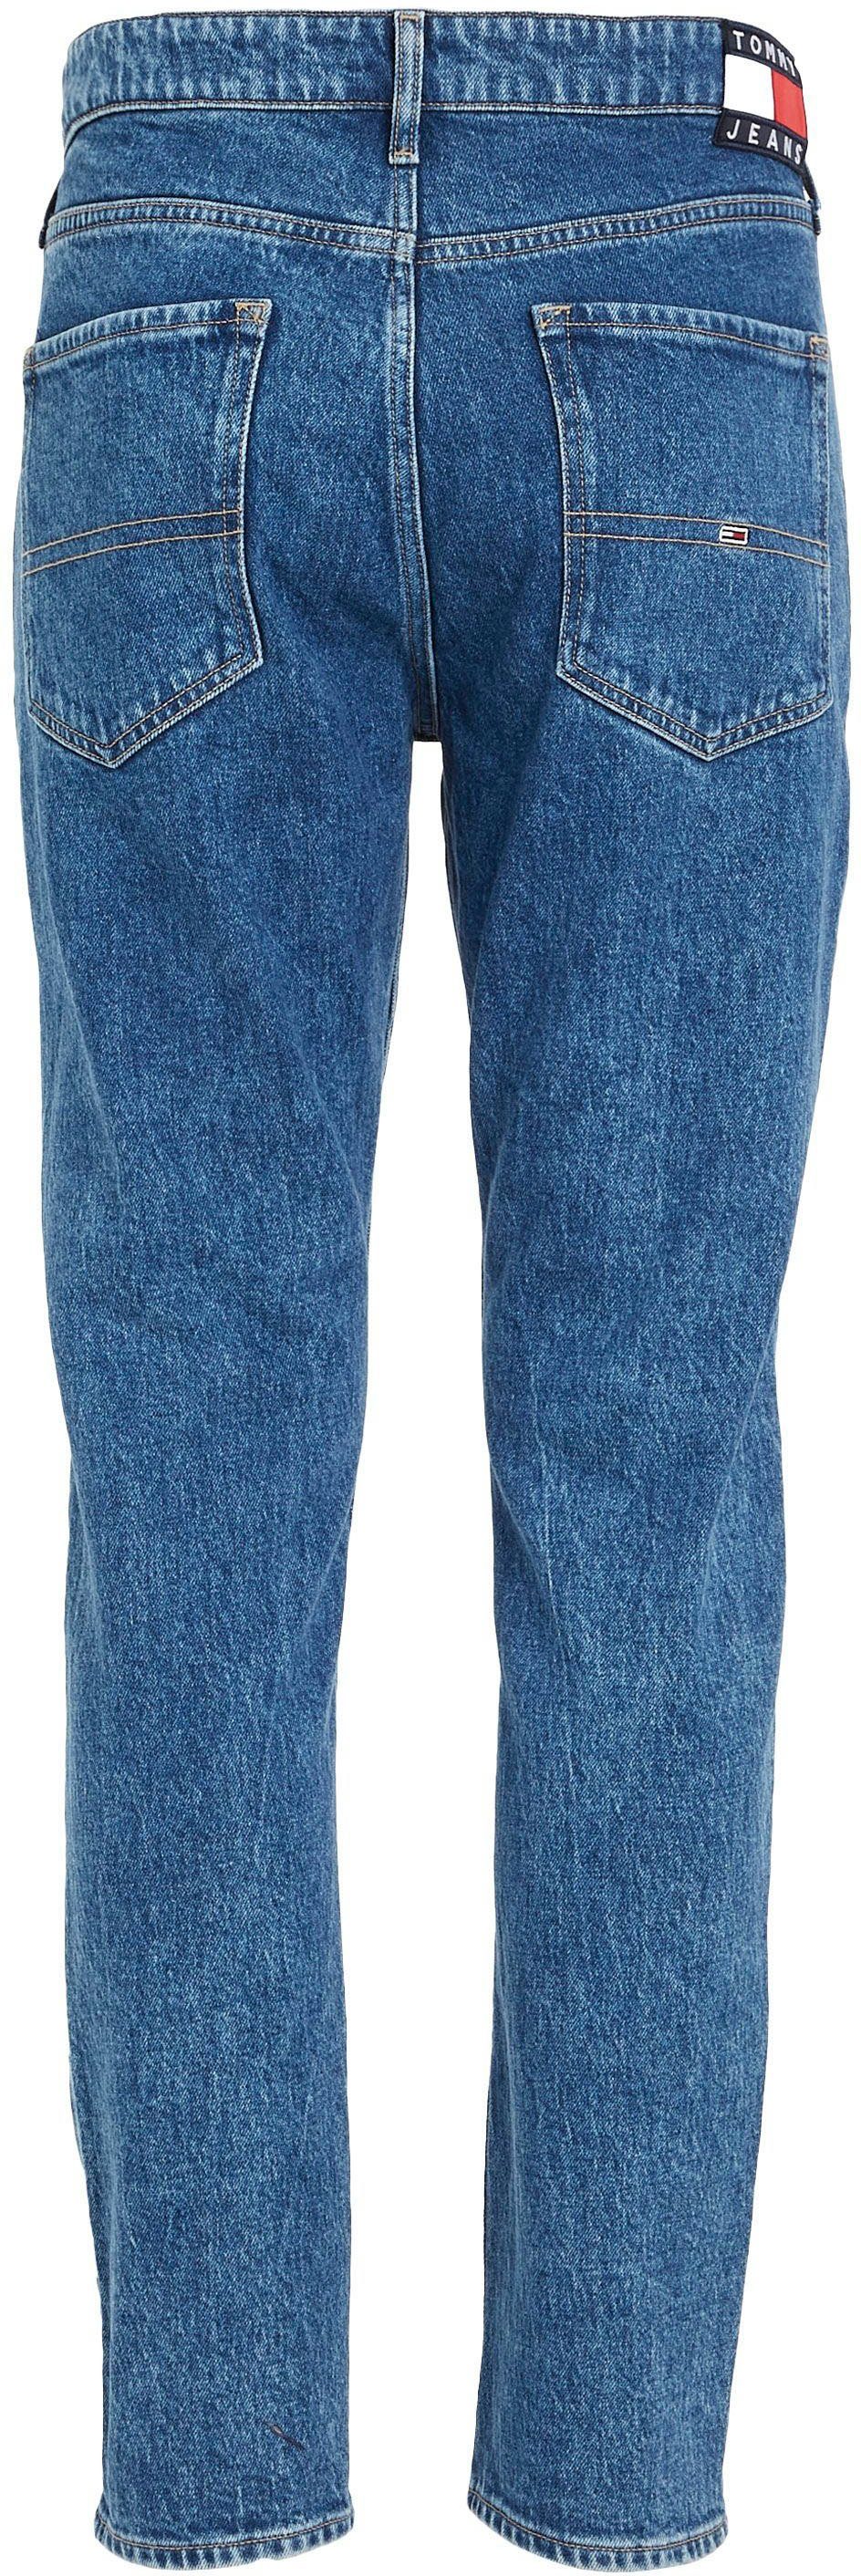 SCANTON Denim Jeans 5-Pocket-Jeans Medium Y Tommy SLIM